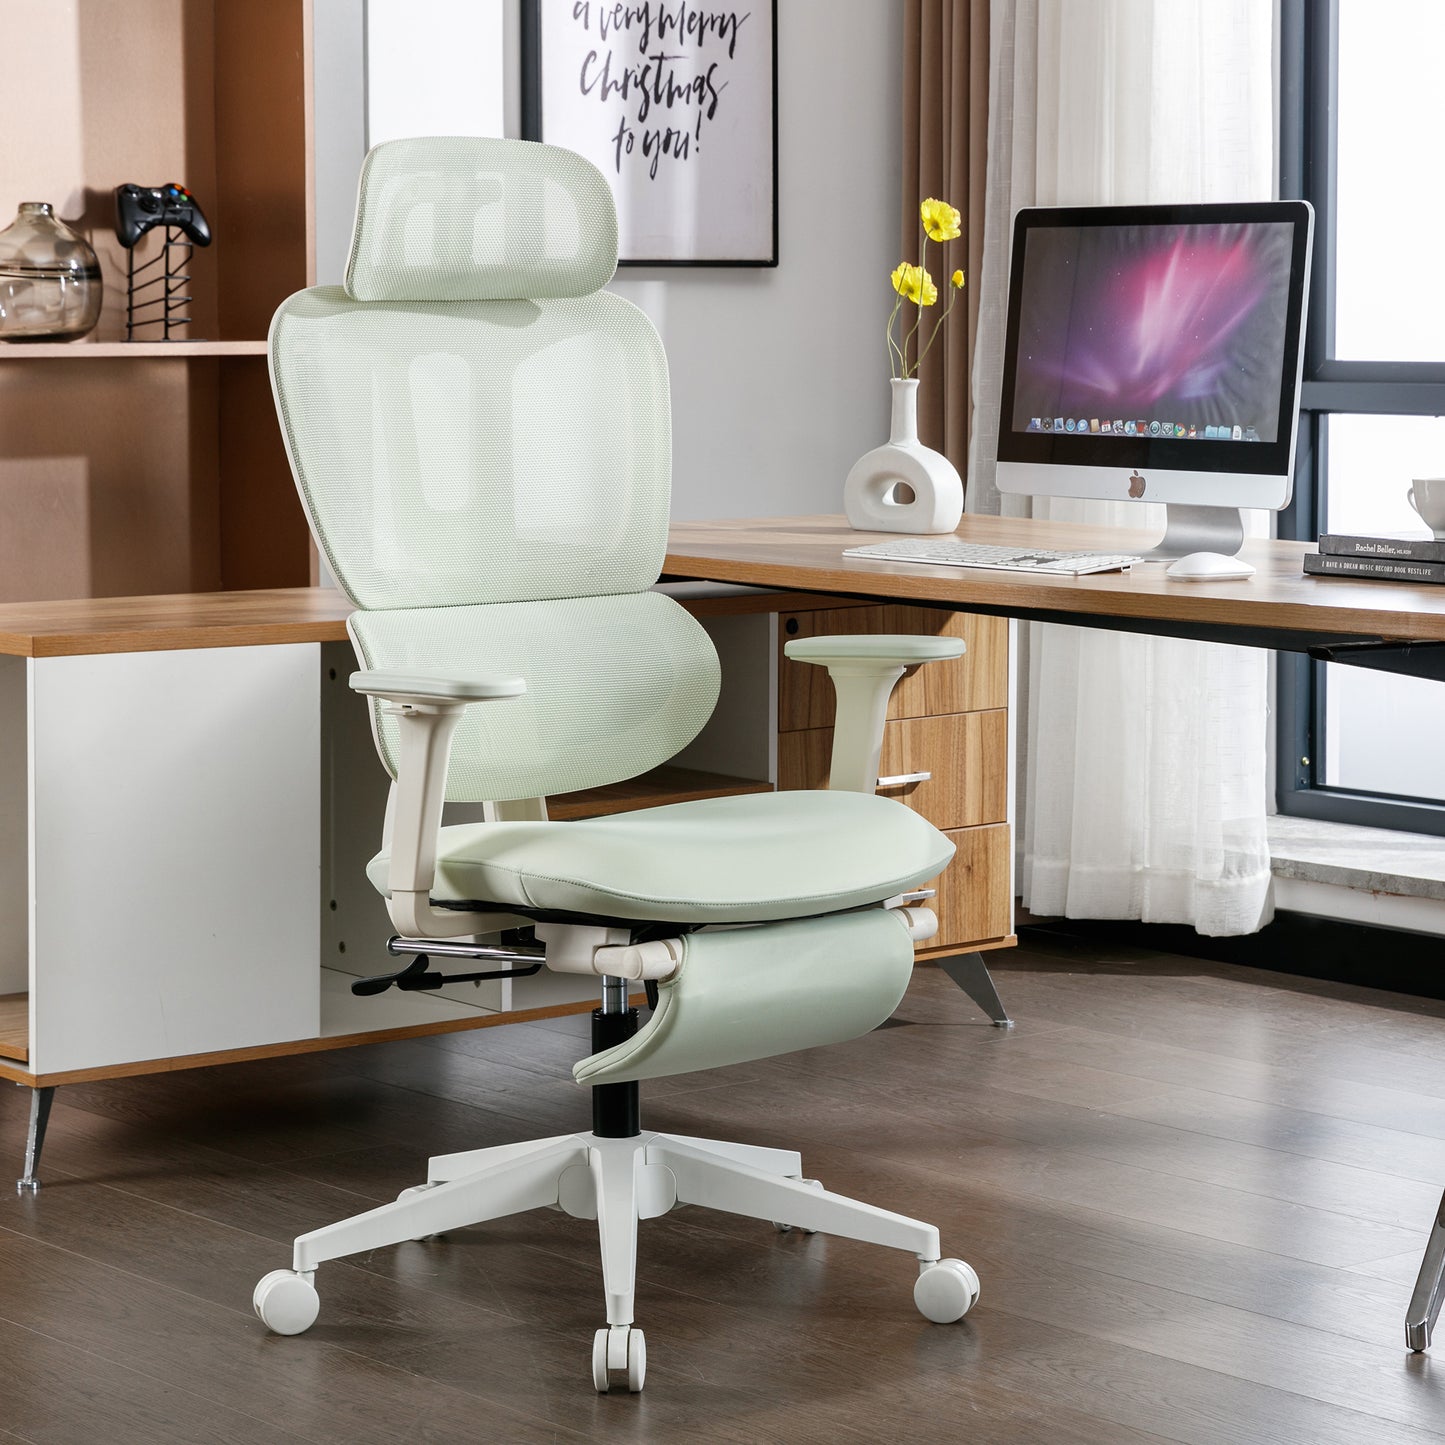 Ergonomic Mesh Office Chair with 2D Adjustable Armrest,High Back Desk Computer Chair,Ergonomic Office Chair with Wheels for Home &amp; Office